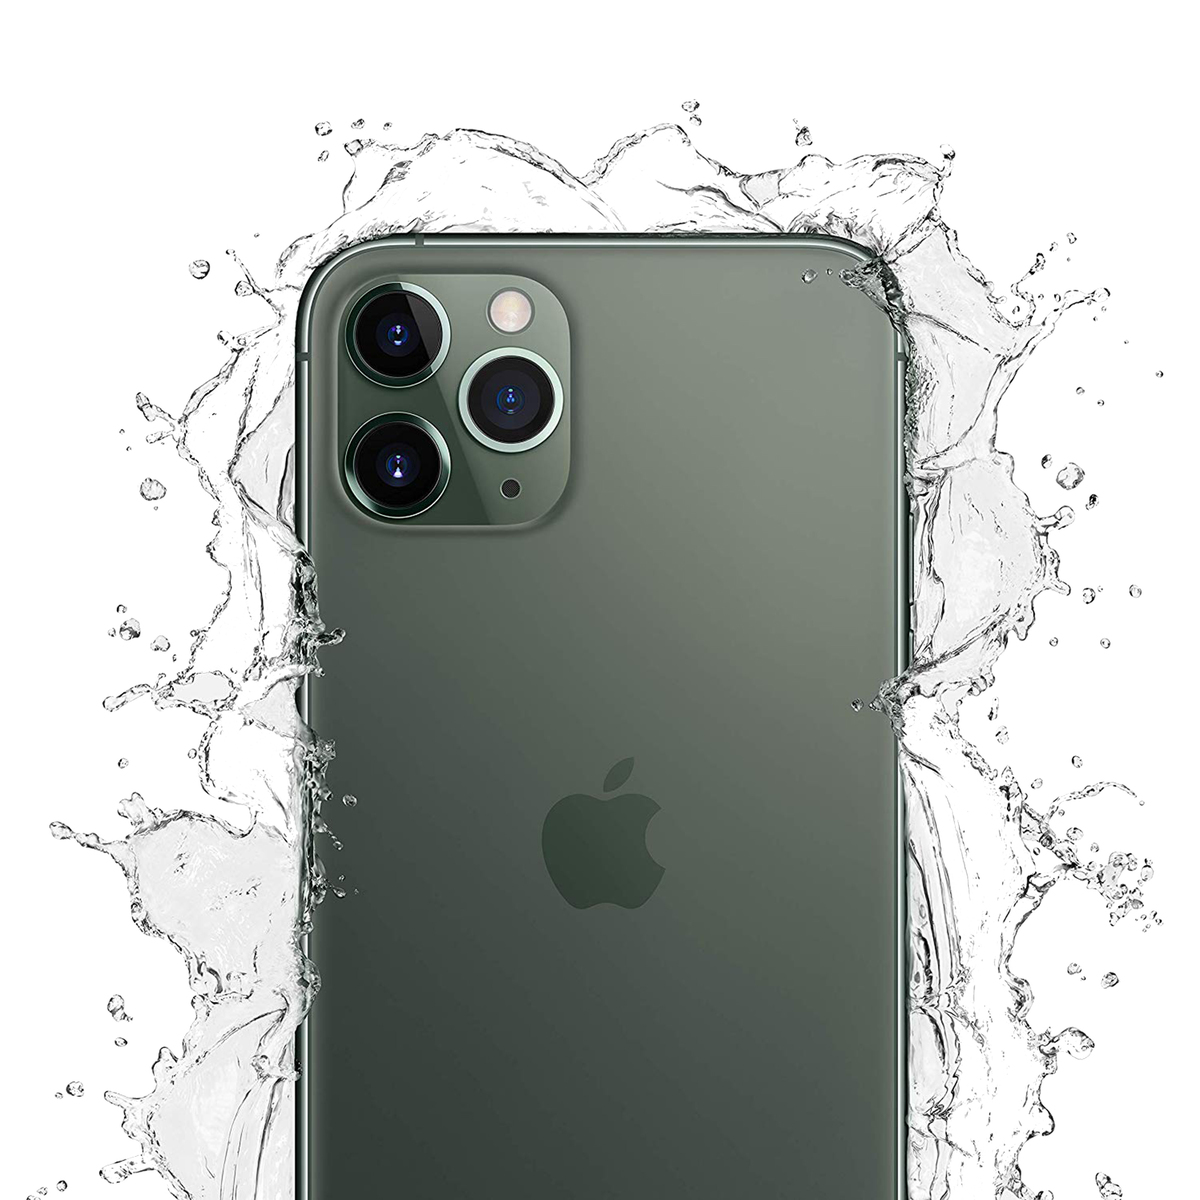 Apple iPhone 11 Pro Max 64GB Midnight green